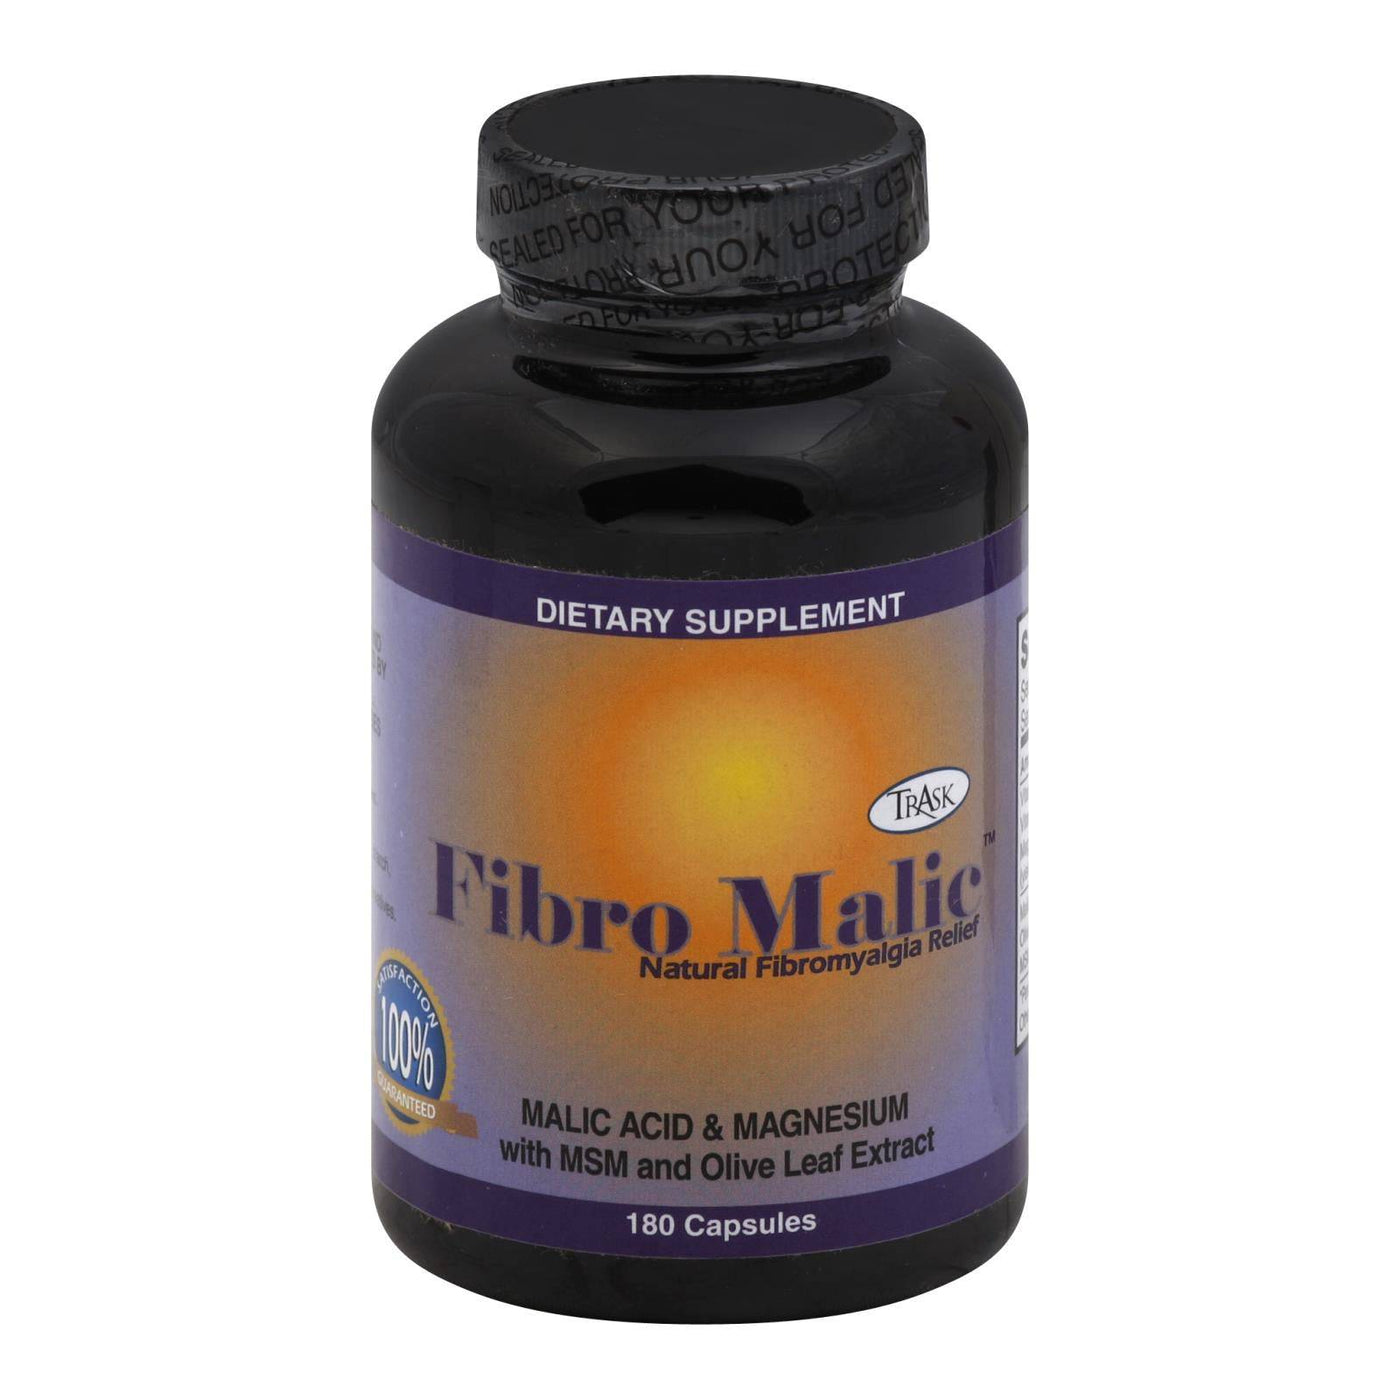 Buy Fibro Malic - Malic Acid And Magnesium - 180 Capsules  at OnlyNaturals.us